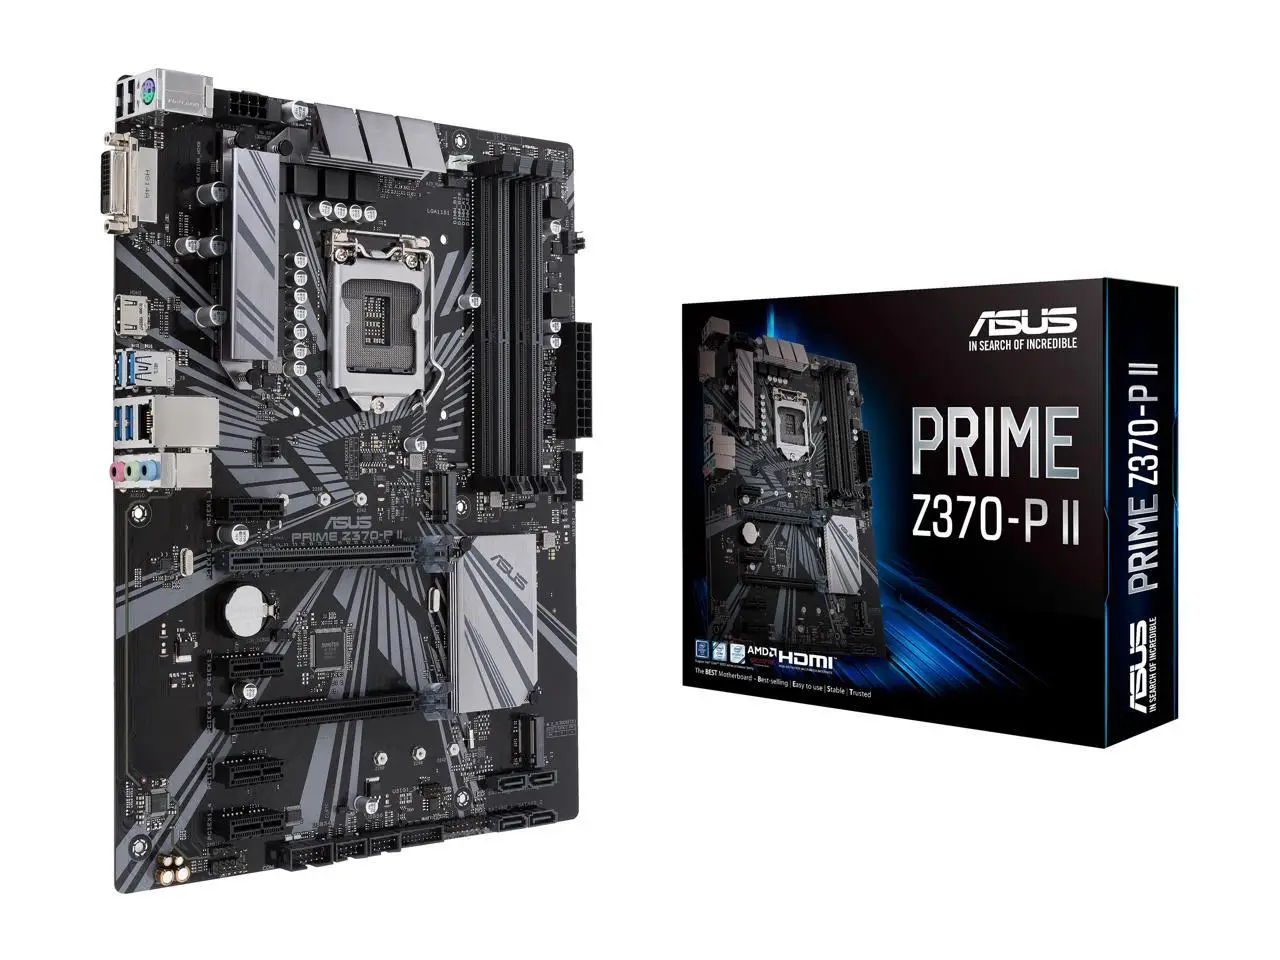 

LGA 1151 Asus PRIME Z370-P II Motherboard Support 8th 9th-Gen Core i7 i5 i3 CPU PCI-E 3.0 DDR4 64GB Desktop Intel Z370